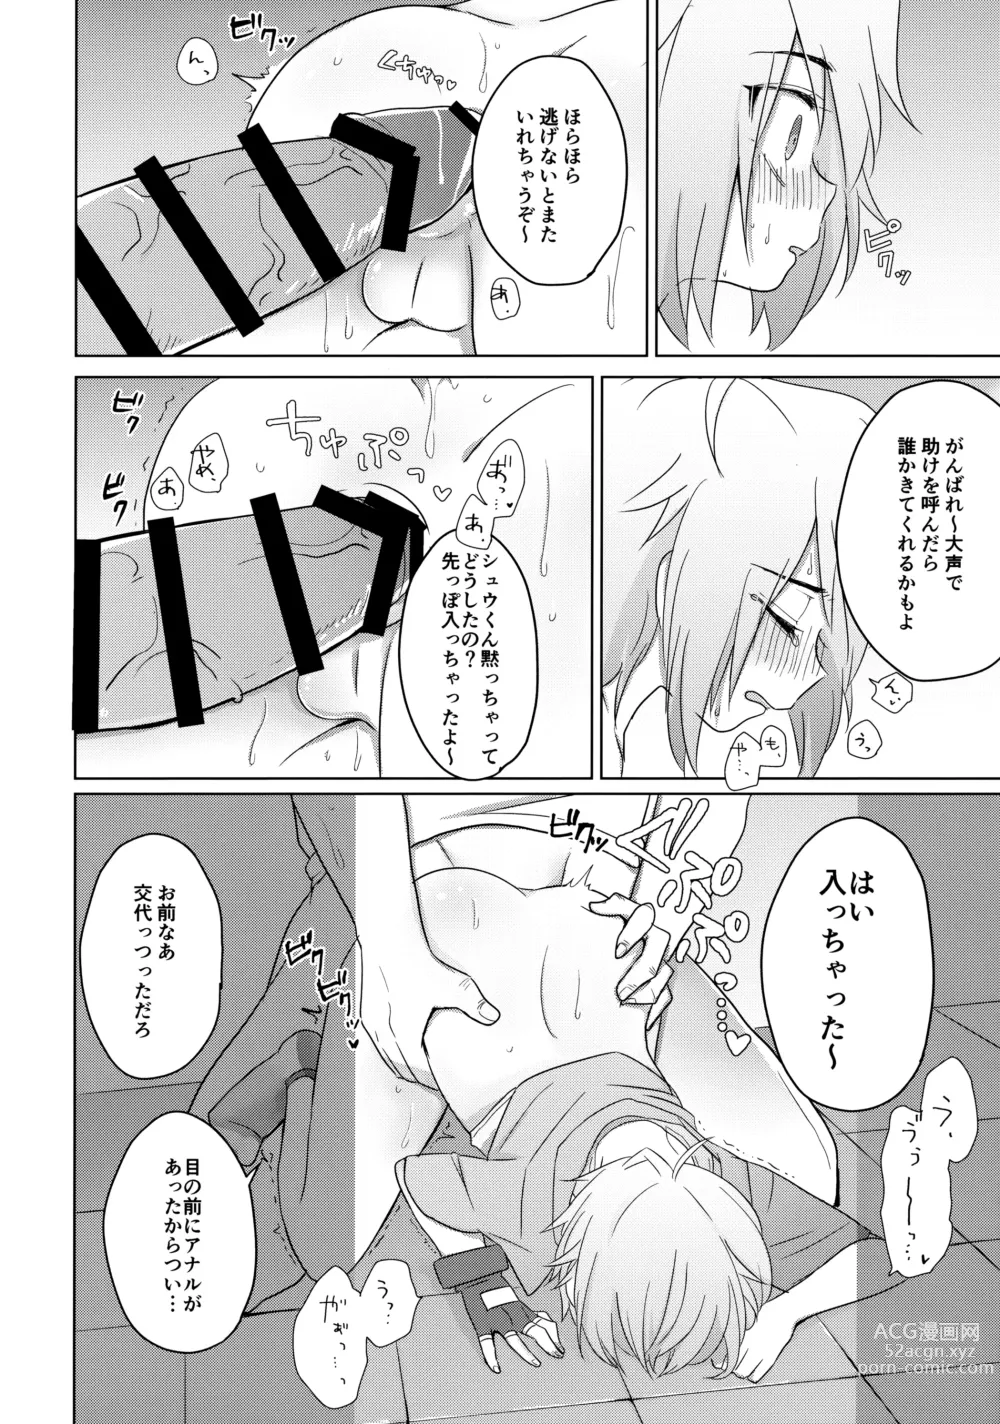 Page 33 of doujinshi Hakoniwa Therapy